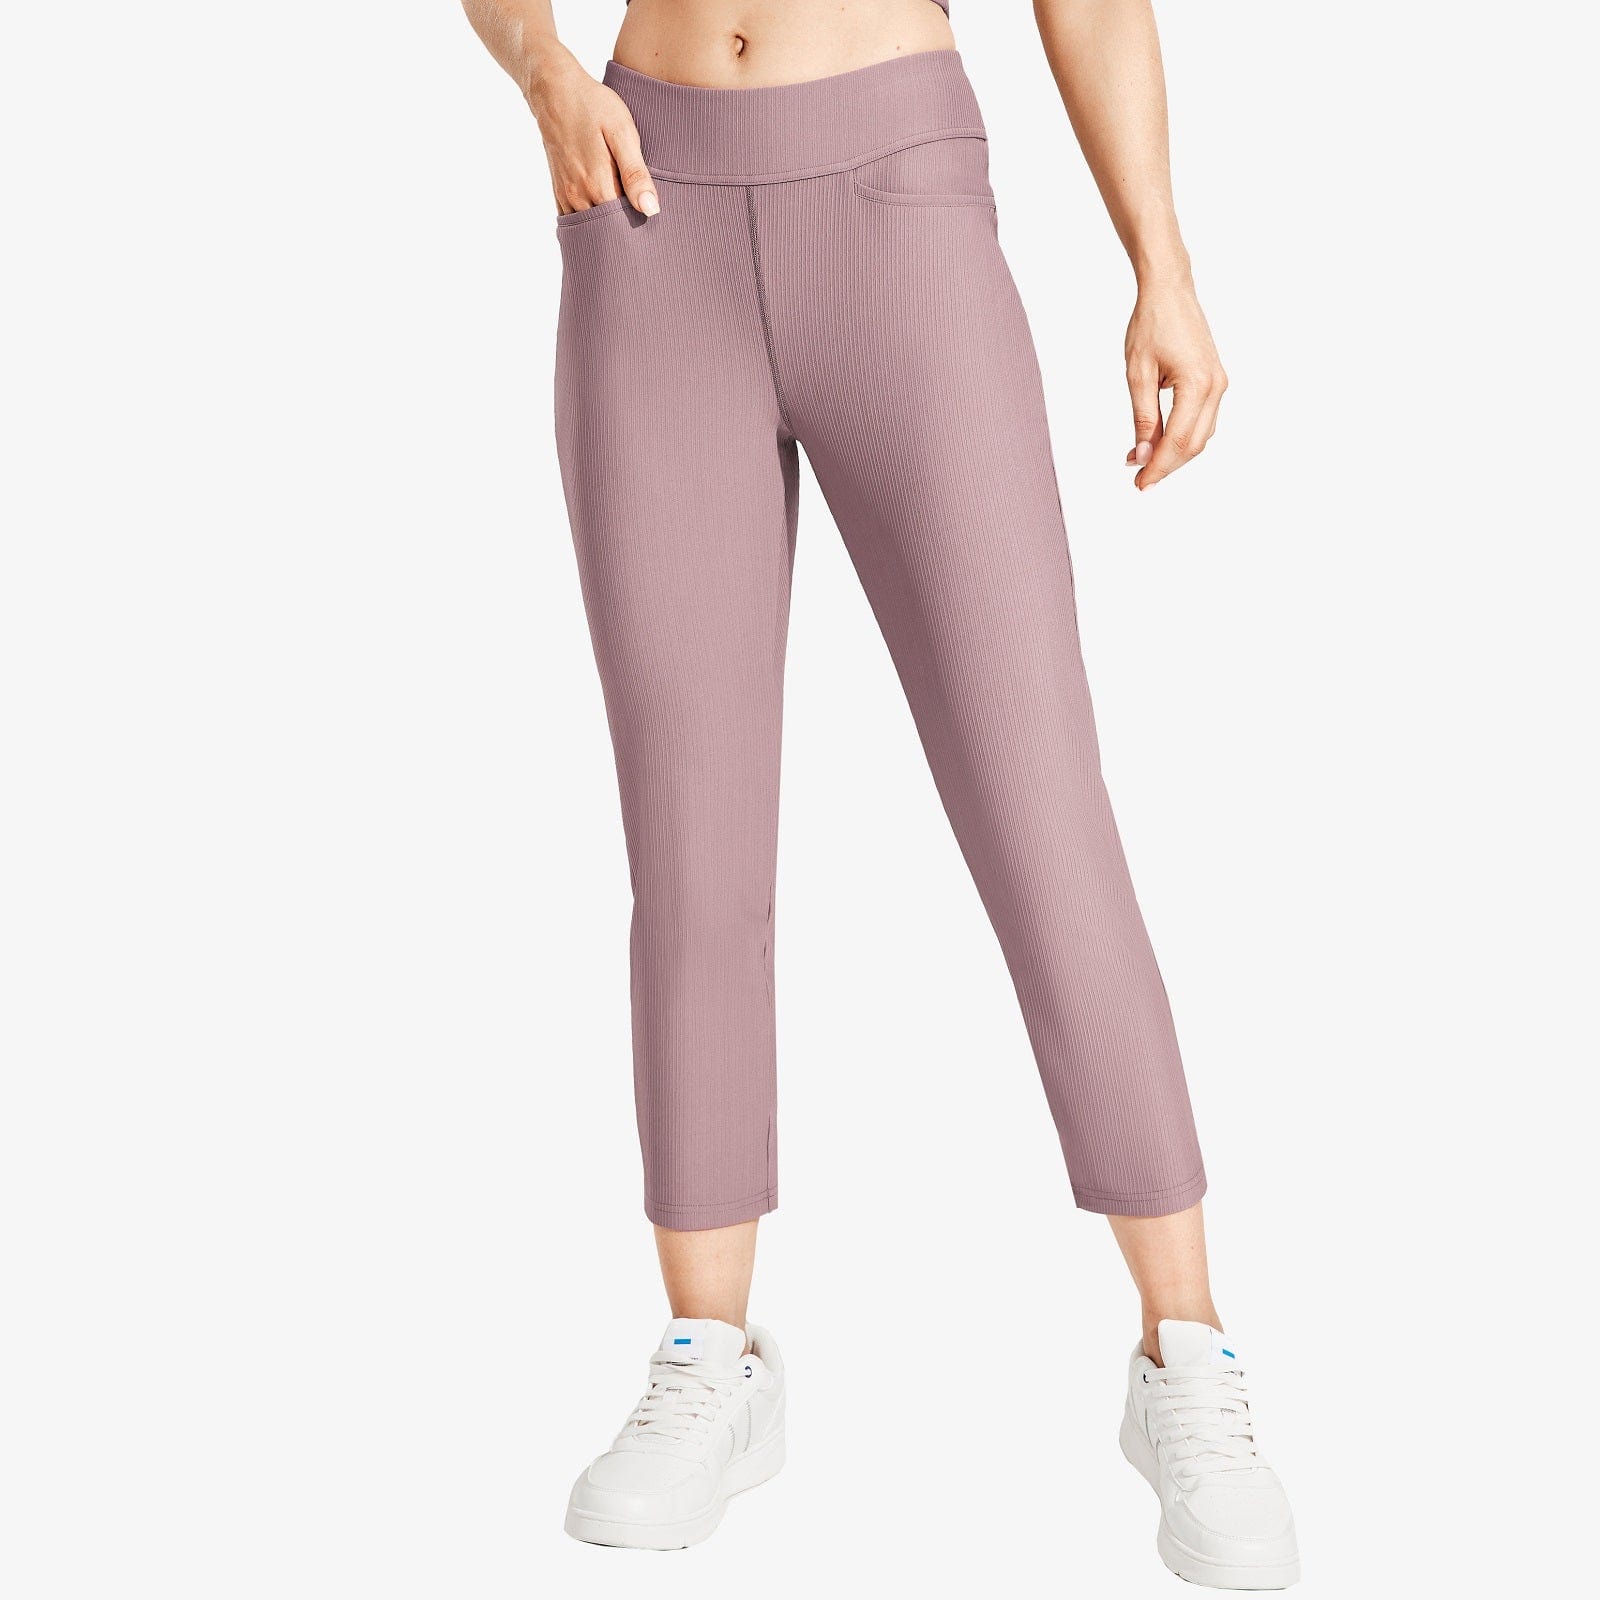 Yoga Leggings Women Gym Athletic Tights Pants-Merlot Red_XL-12